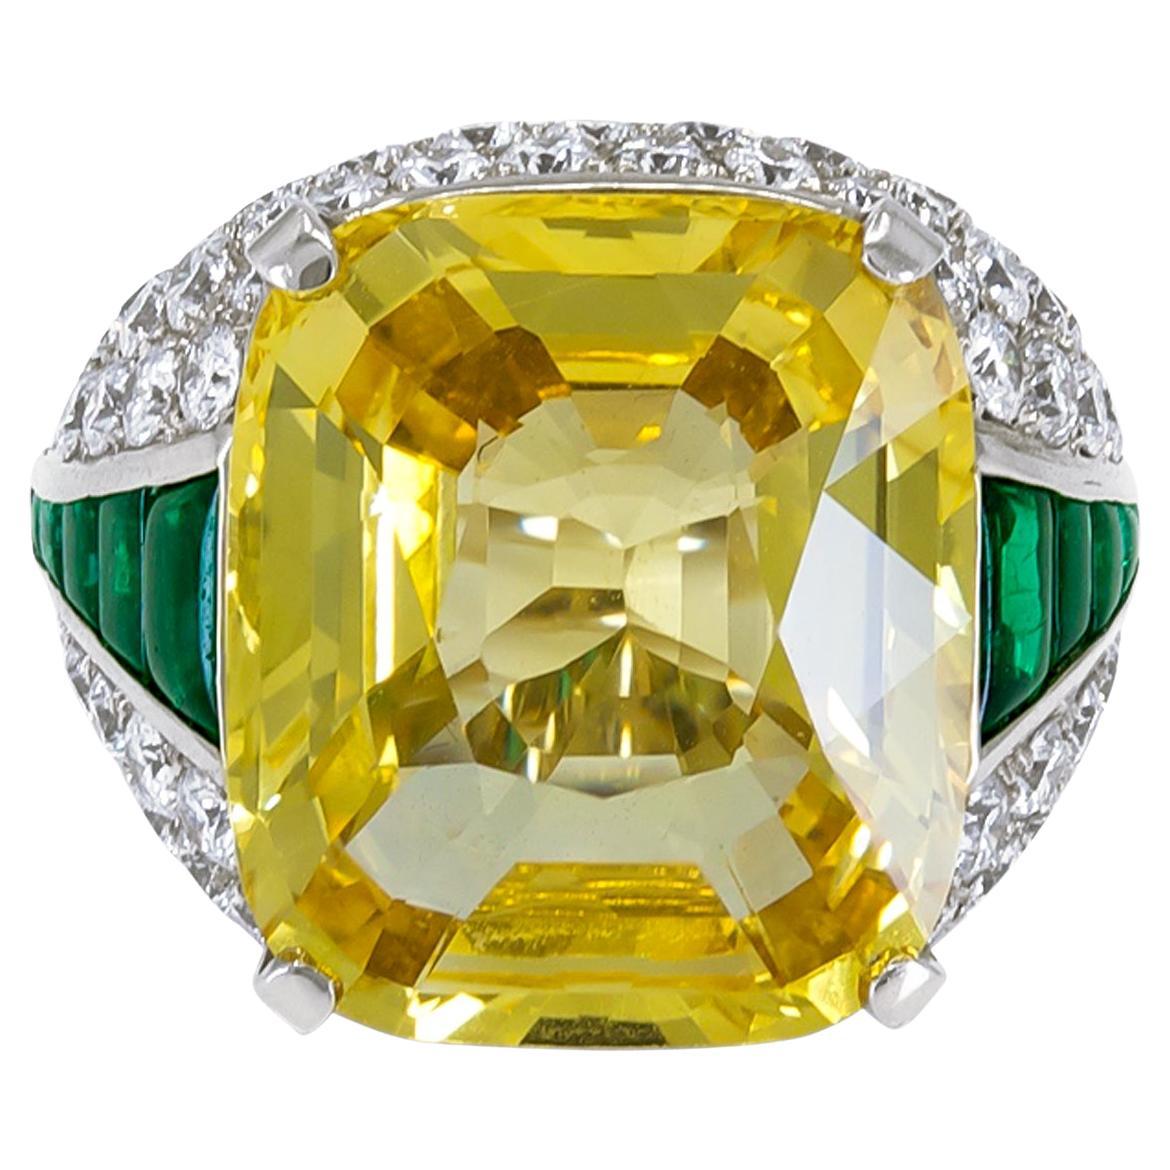 GIA Certified 19.06 Carat Yellow Sapphire Diamond Emerald Cocktail Ring